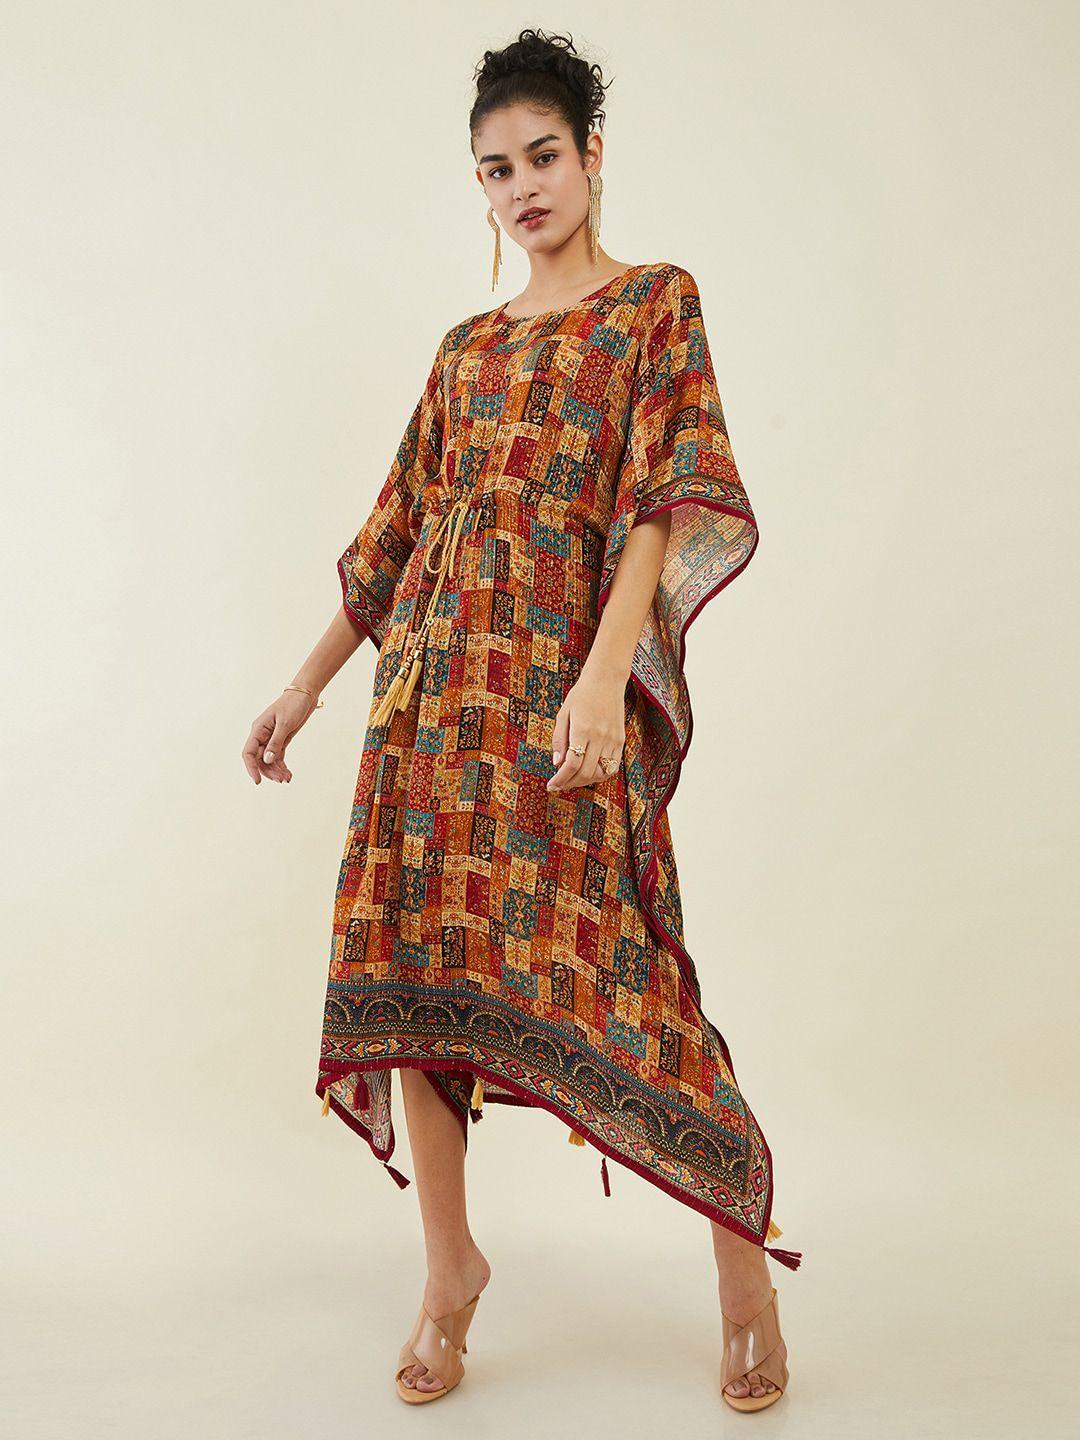 soch-beige-ethnic-motifs-printed-sequined-kaftan-midi-ethnic-dress